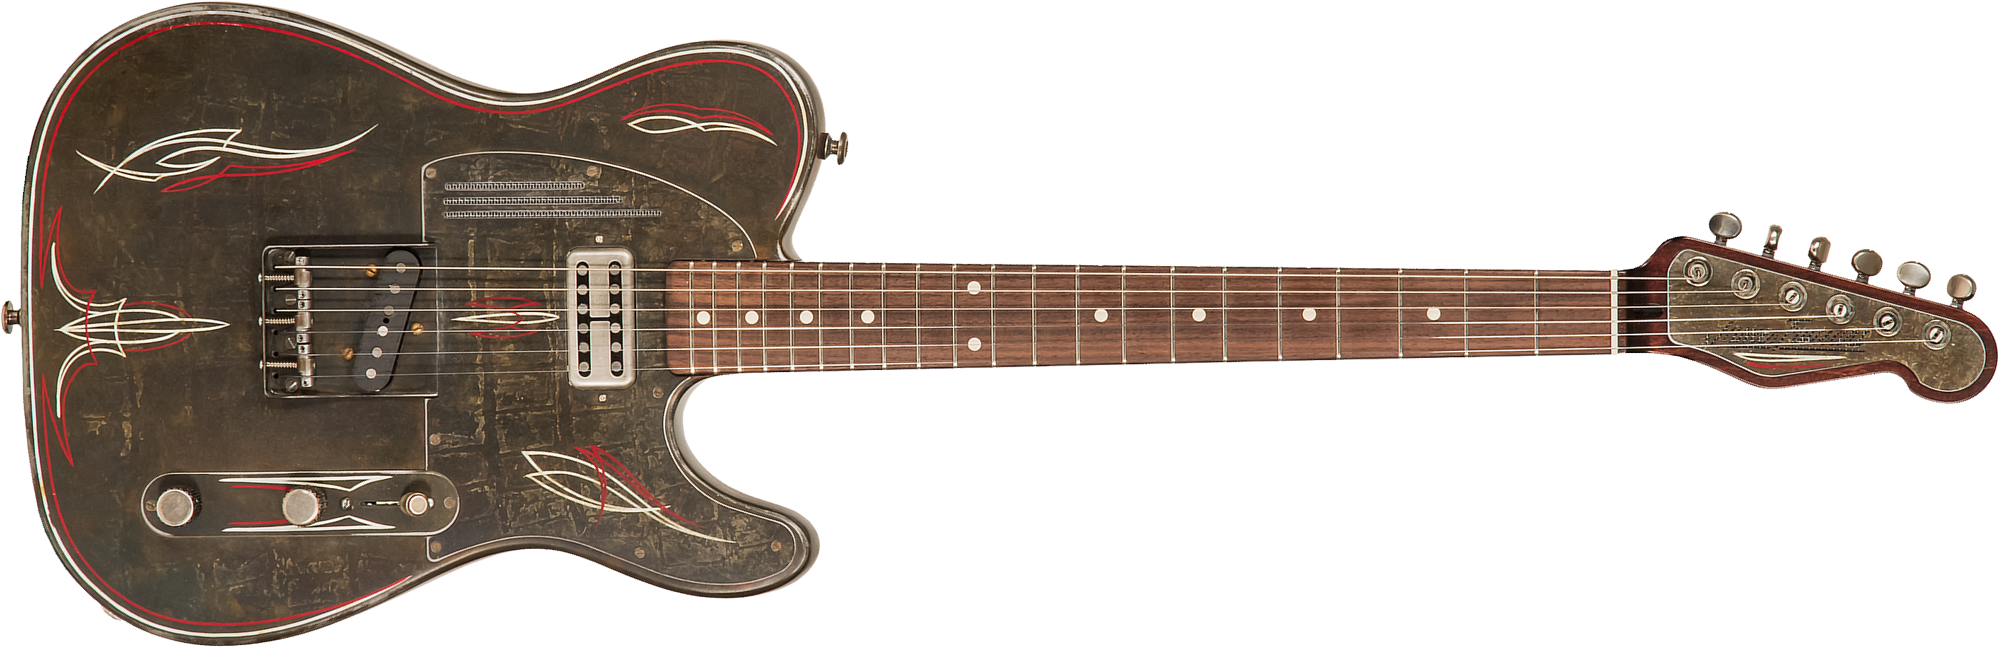 James Trussart Steelcaster Perf.back Sh Tv Jones Ht Rw #21167 - Rust O Matic Pinstriped - Televorm elektrische gitaar - Main picture